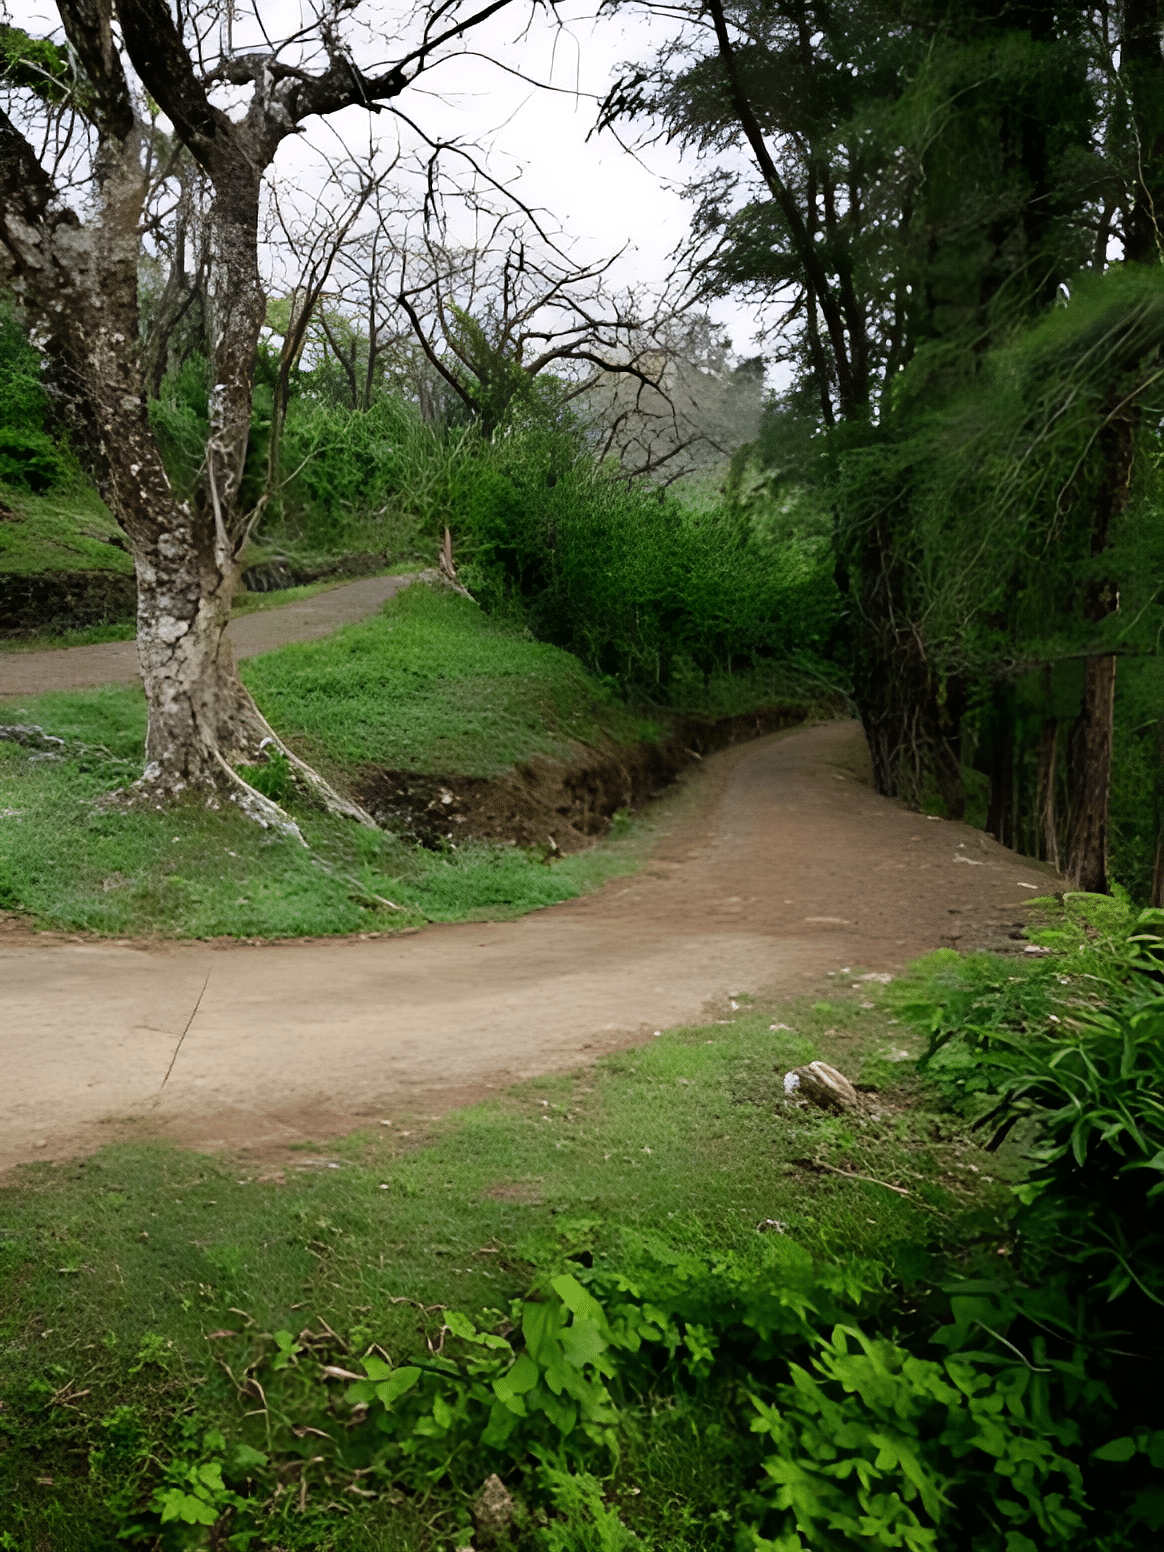 Hike through the Rubber Estates in Trivandrum